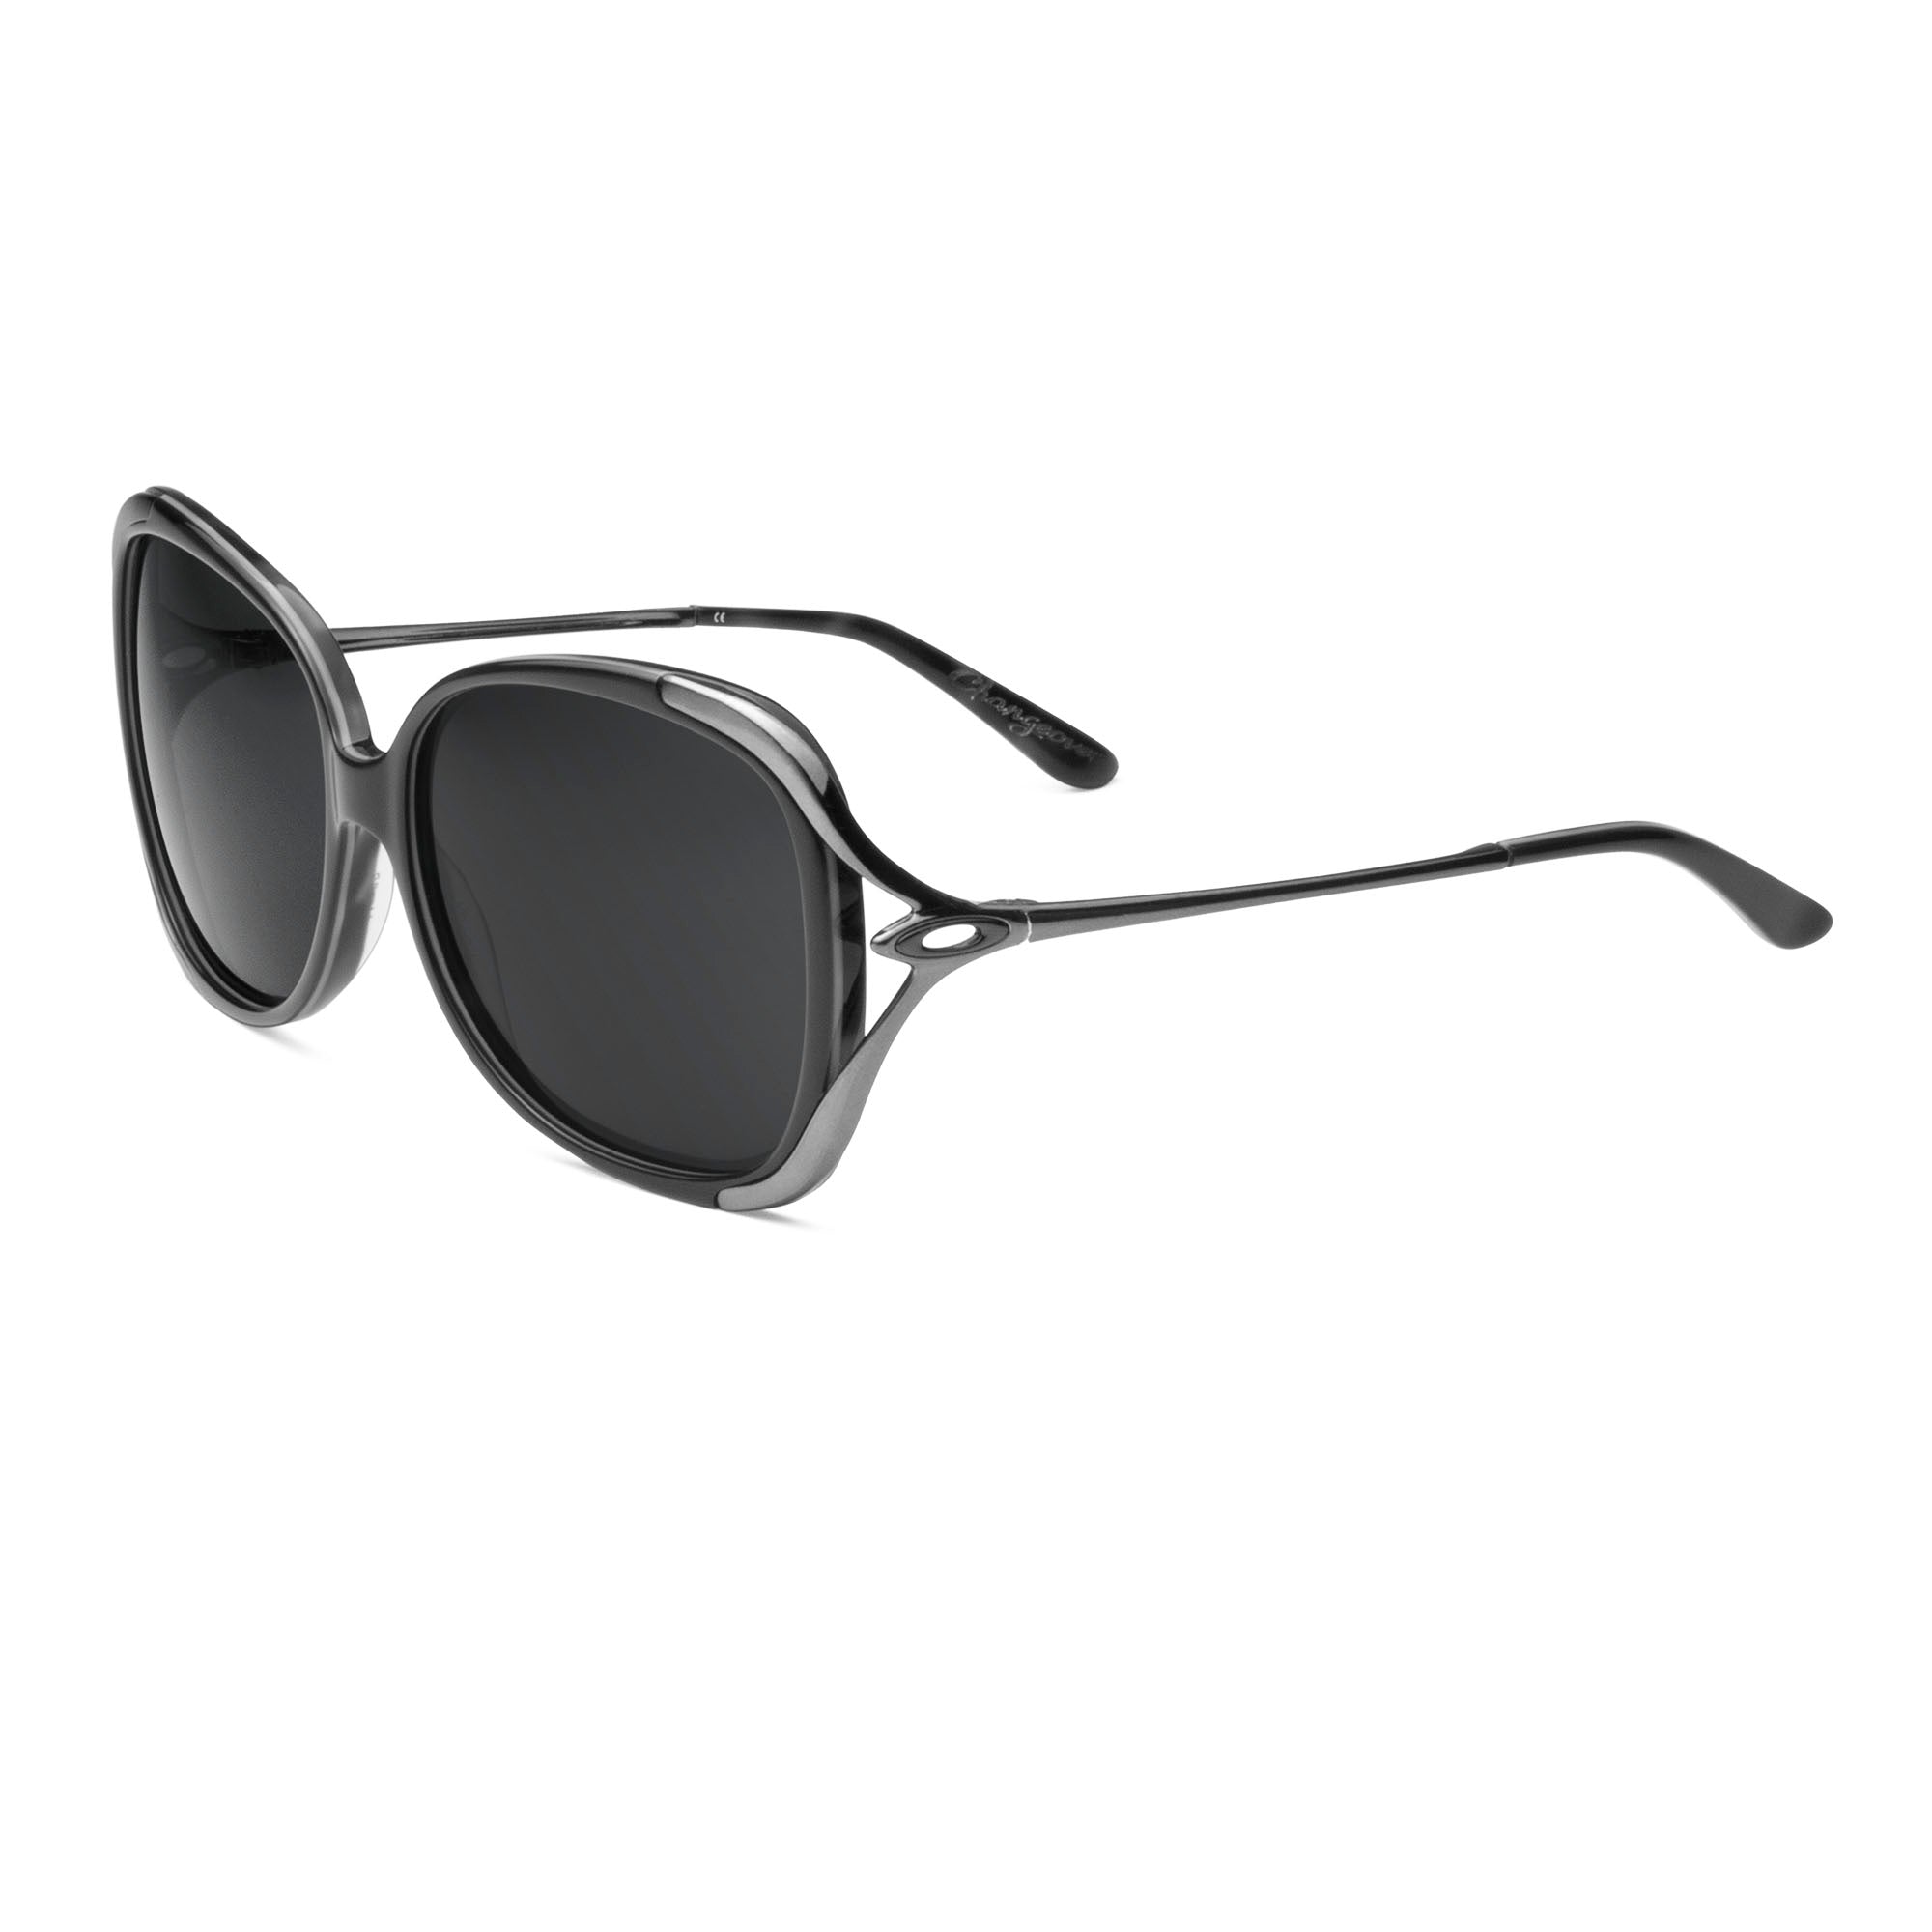 Oakley Gascan | Buy Gascan Sunglasses Online | Just Sunnies